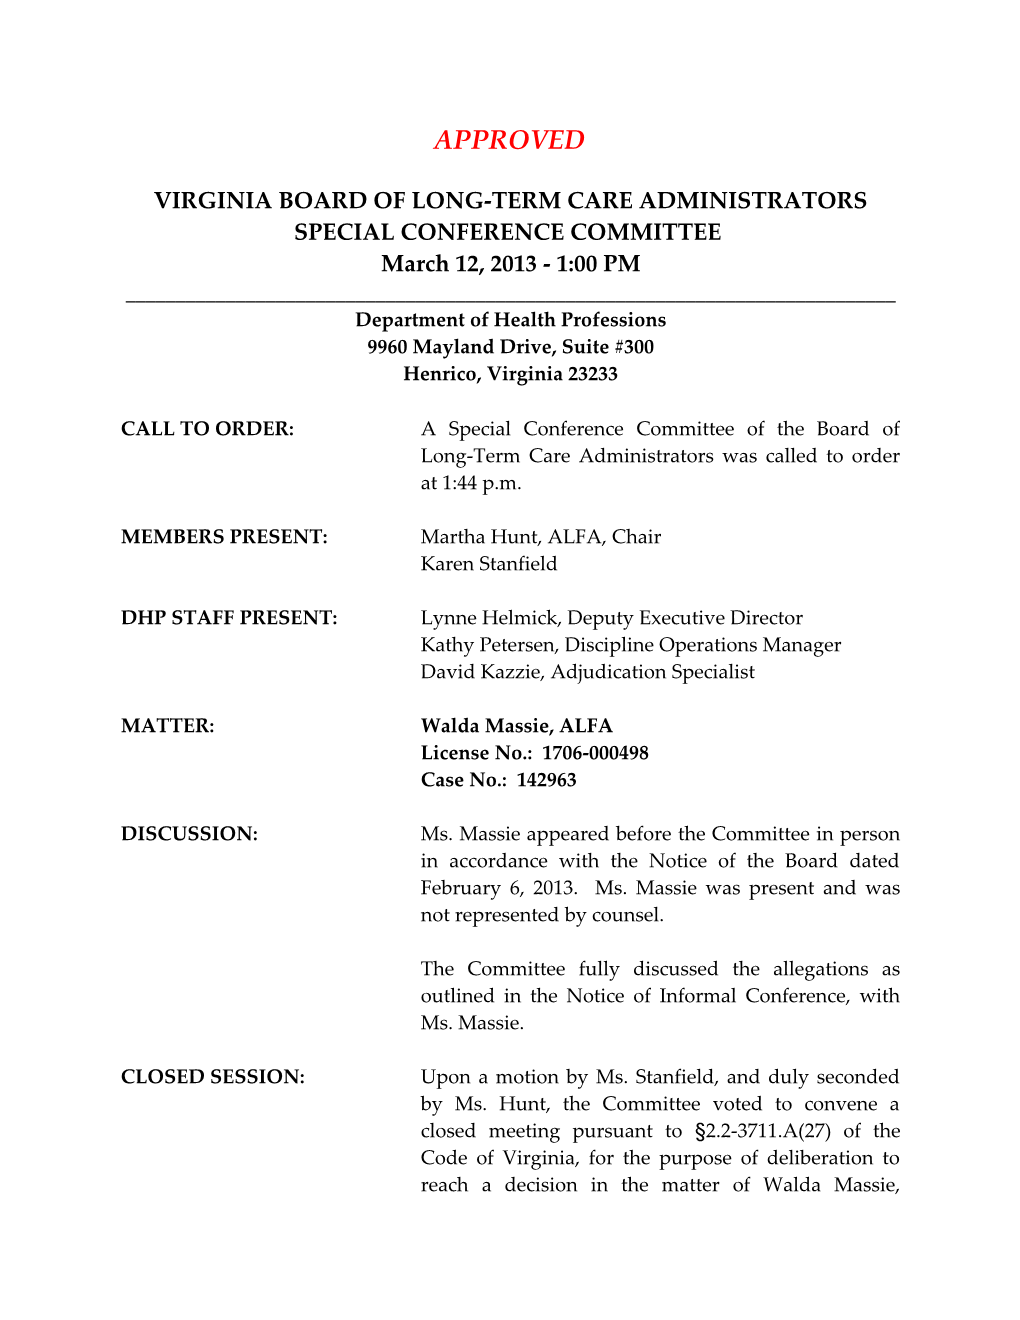 Virginia Board of Long-Term Care Administrators s2